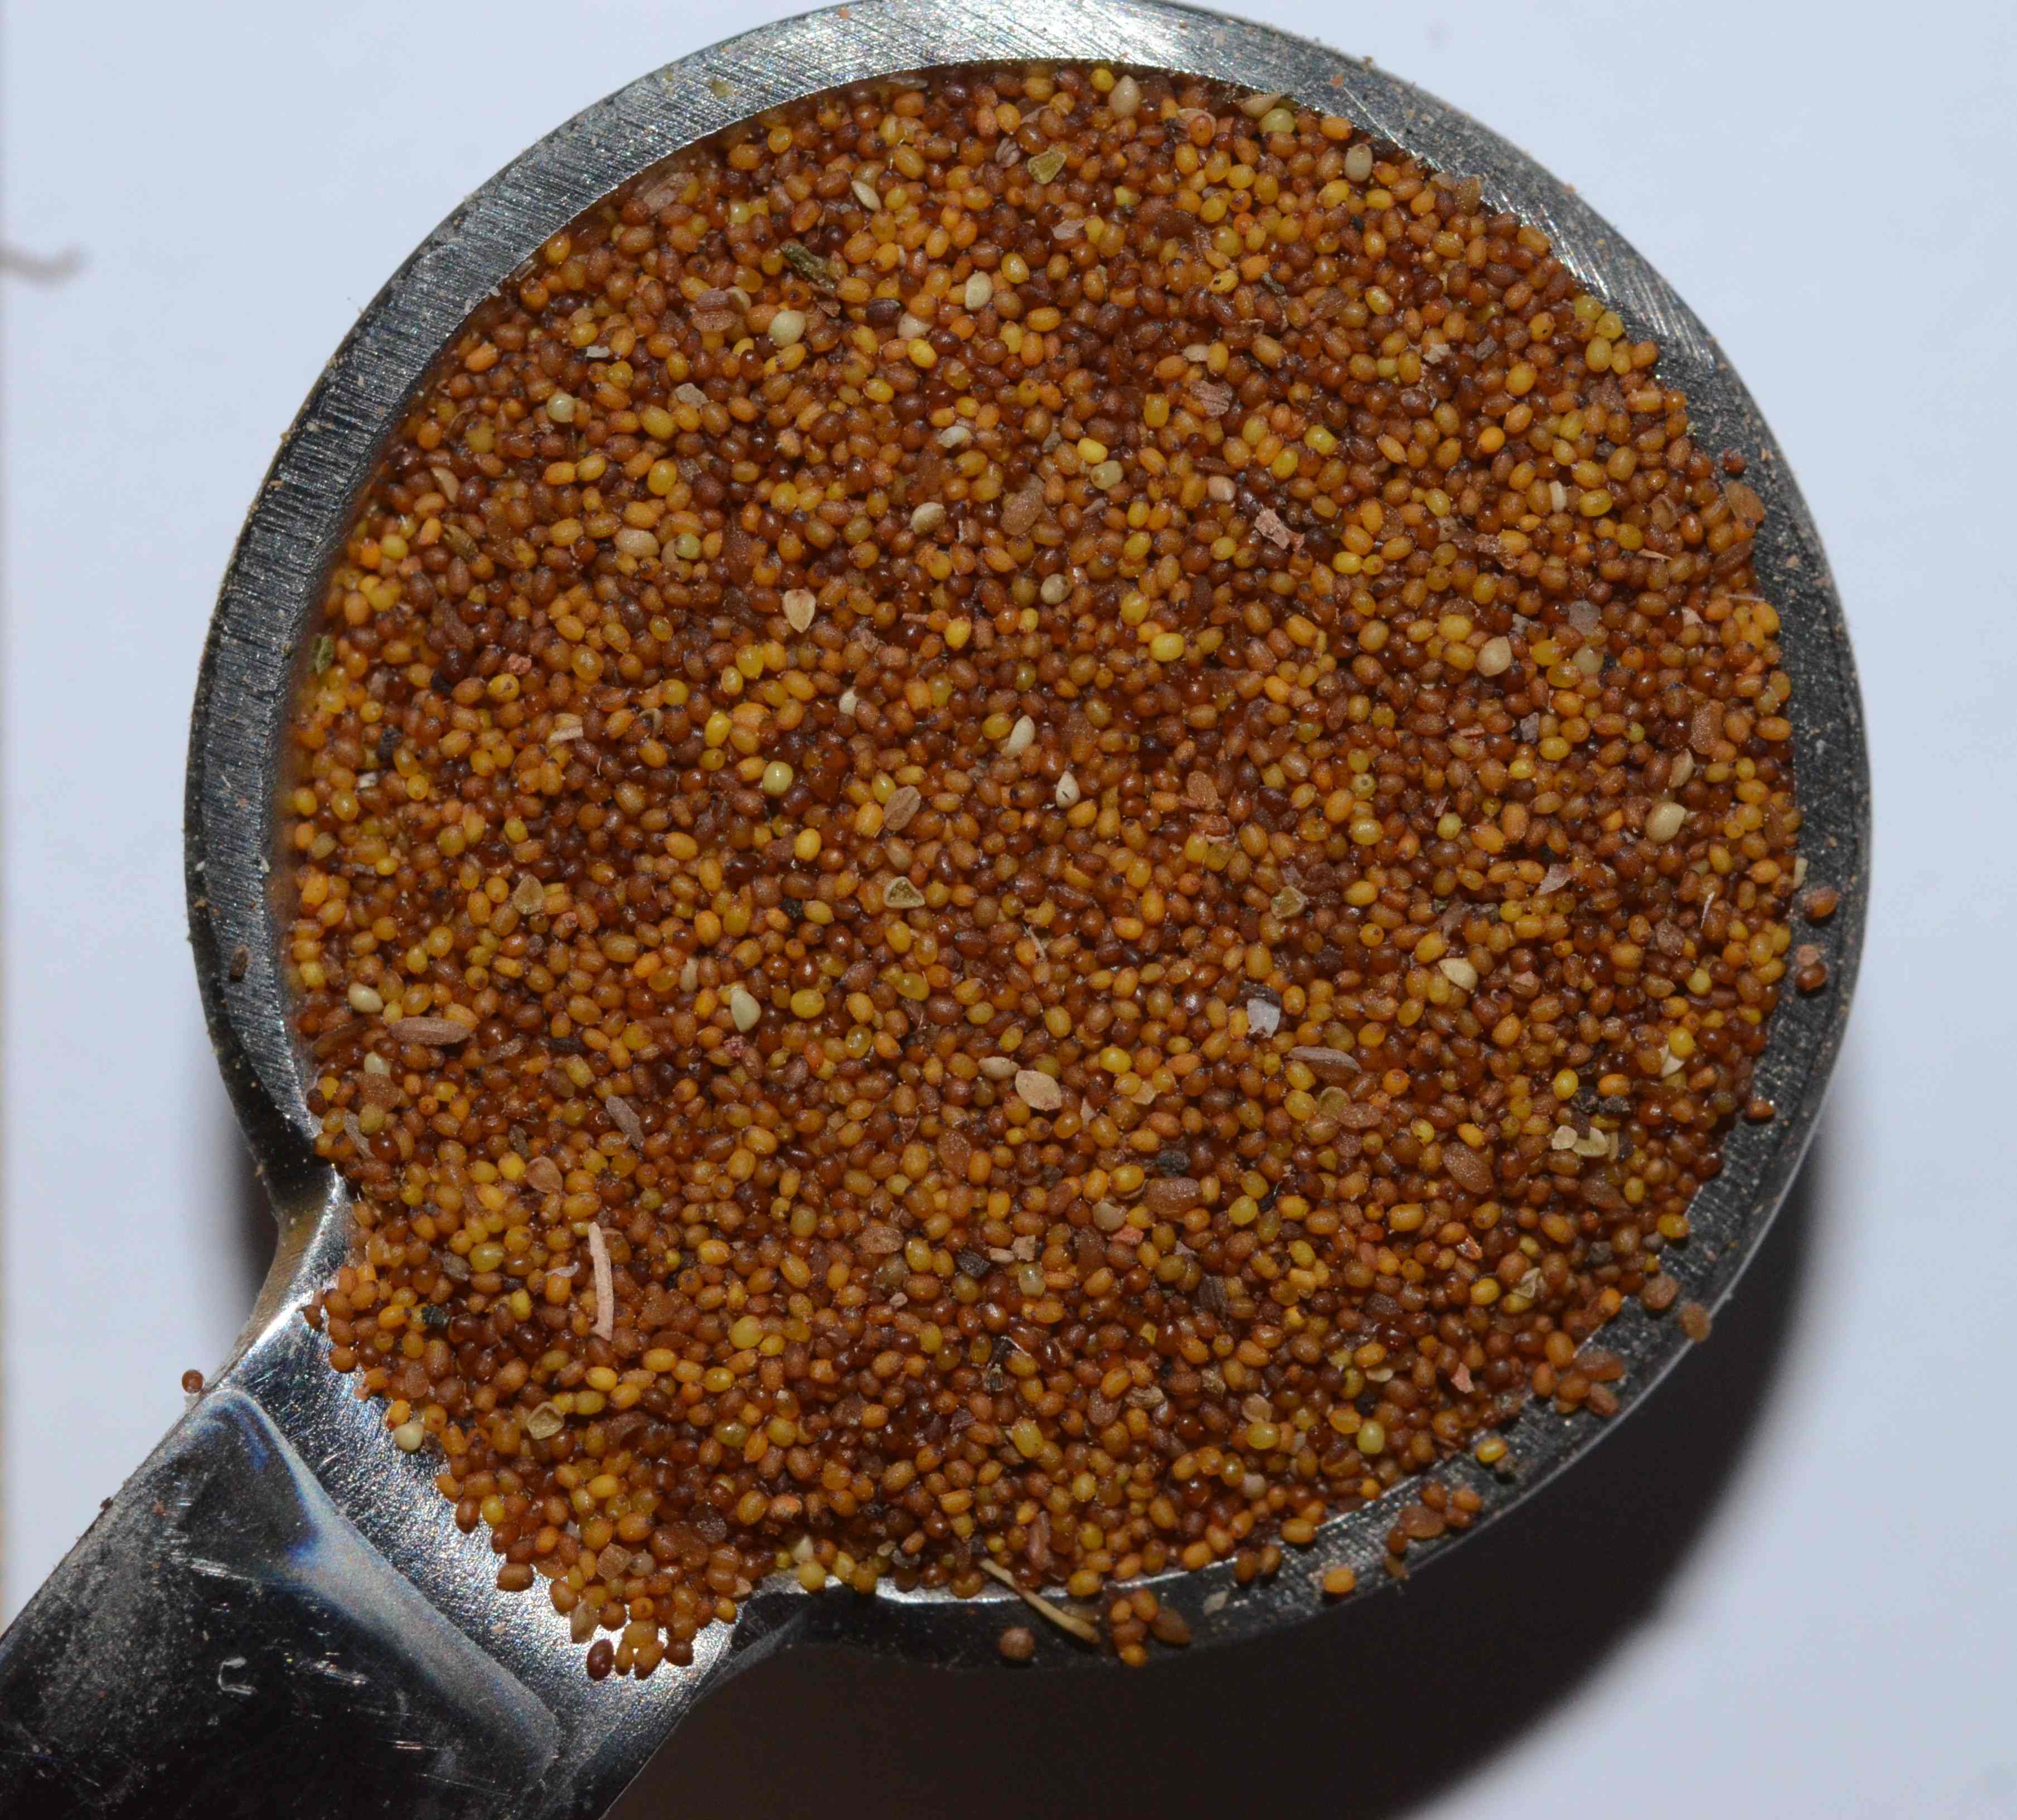 Juncus bufonius seeds in a 1/4 tsp (2 cm diameter).